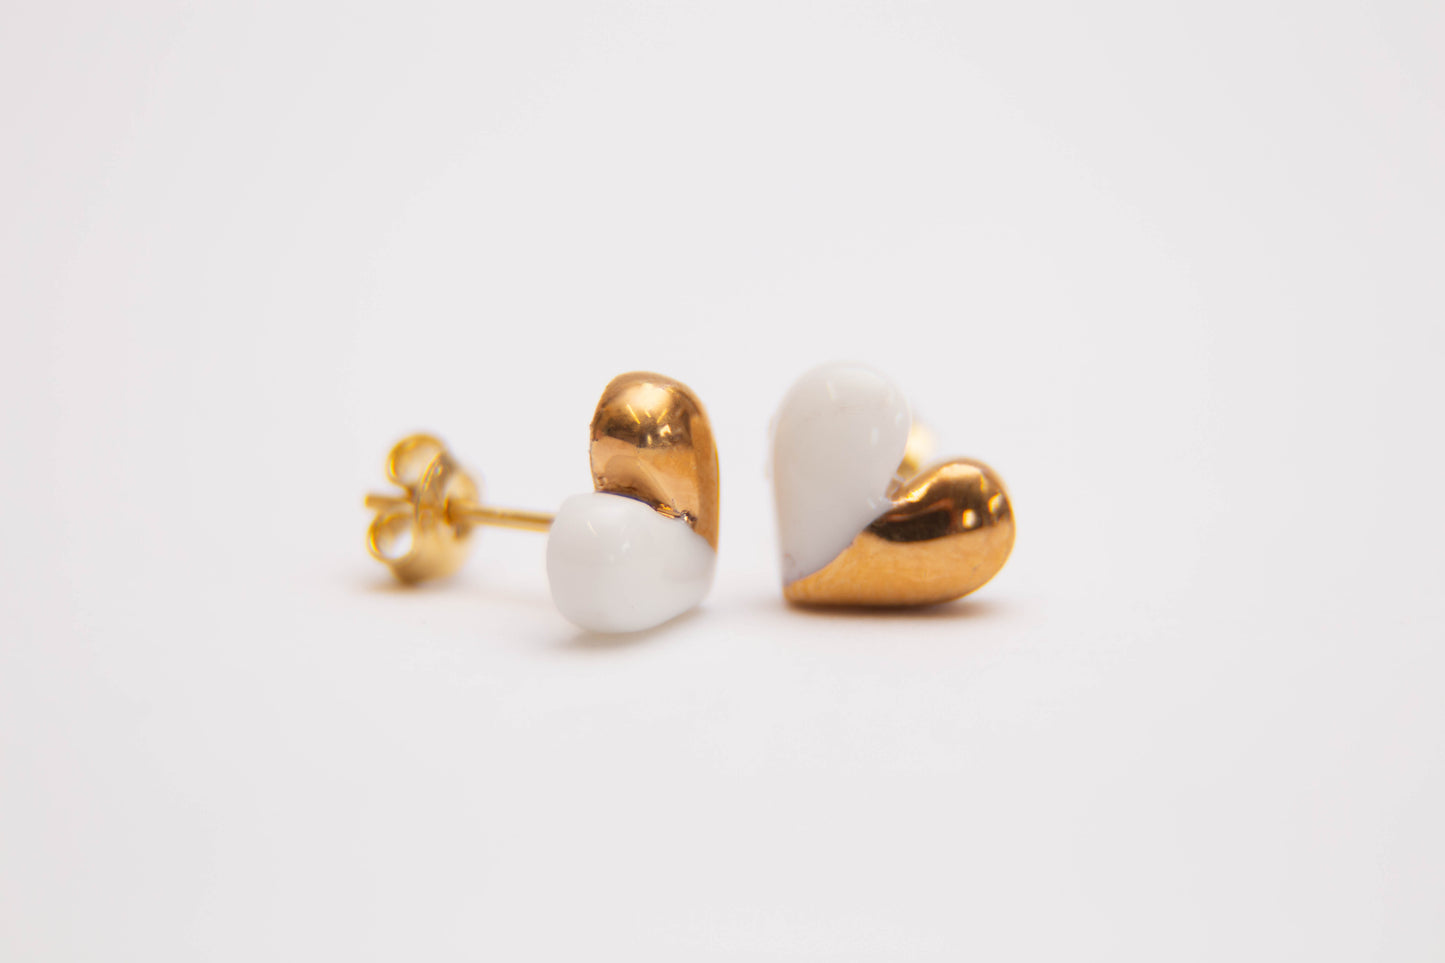 Širdelės - balto porceliano auskarai su aukso liustra